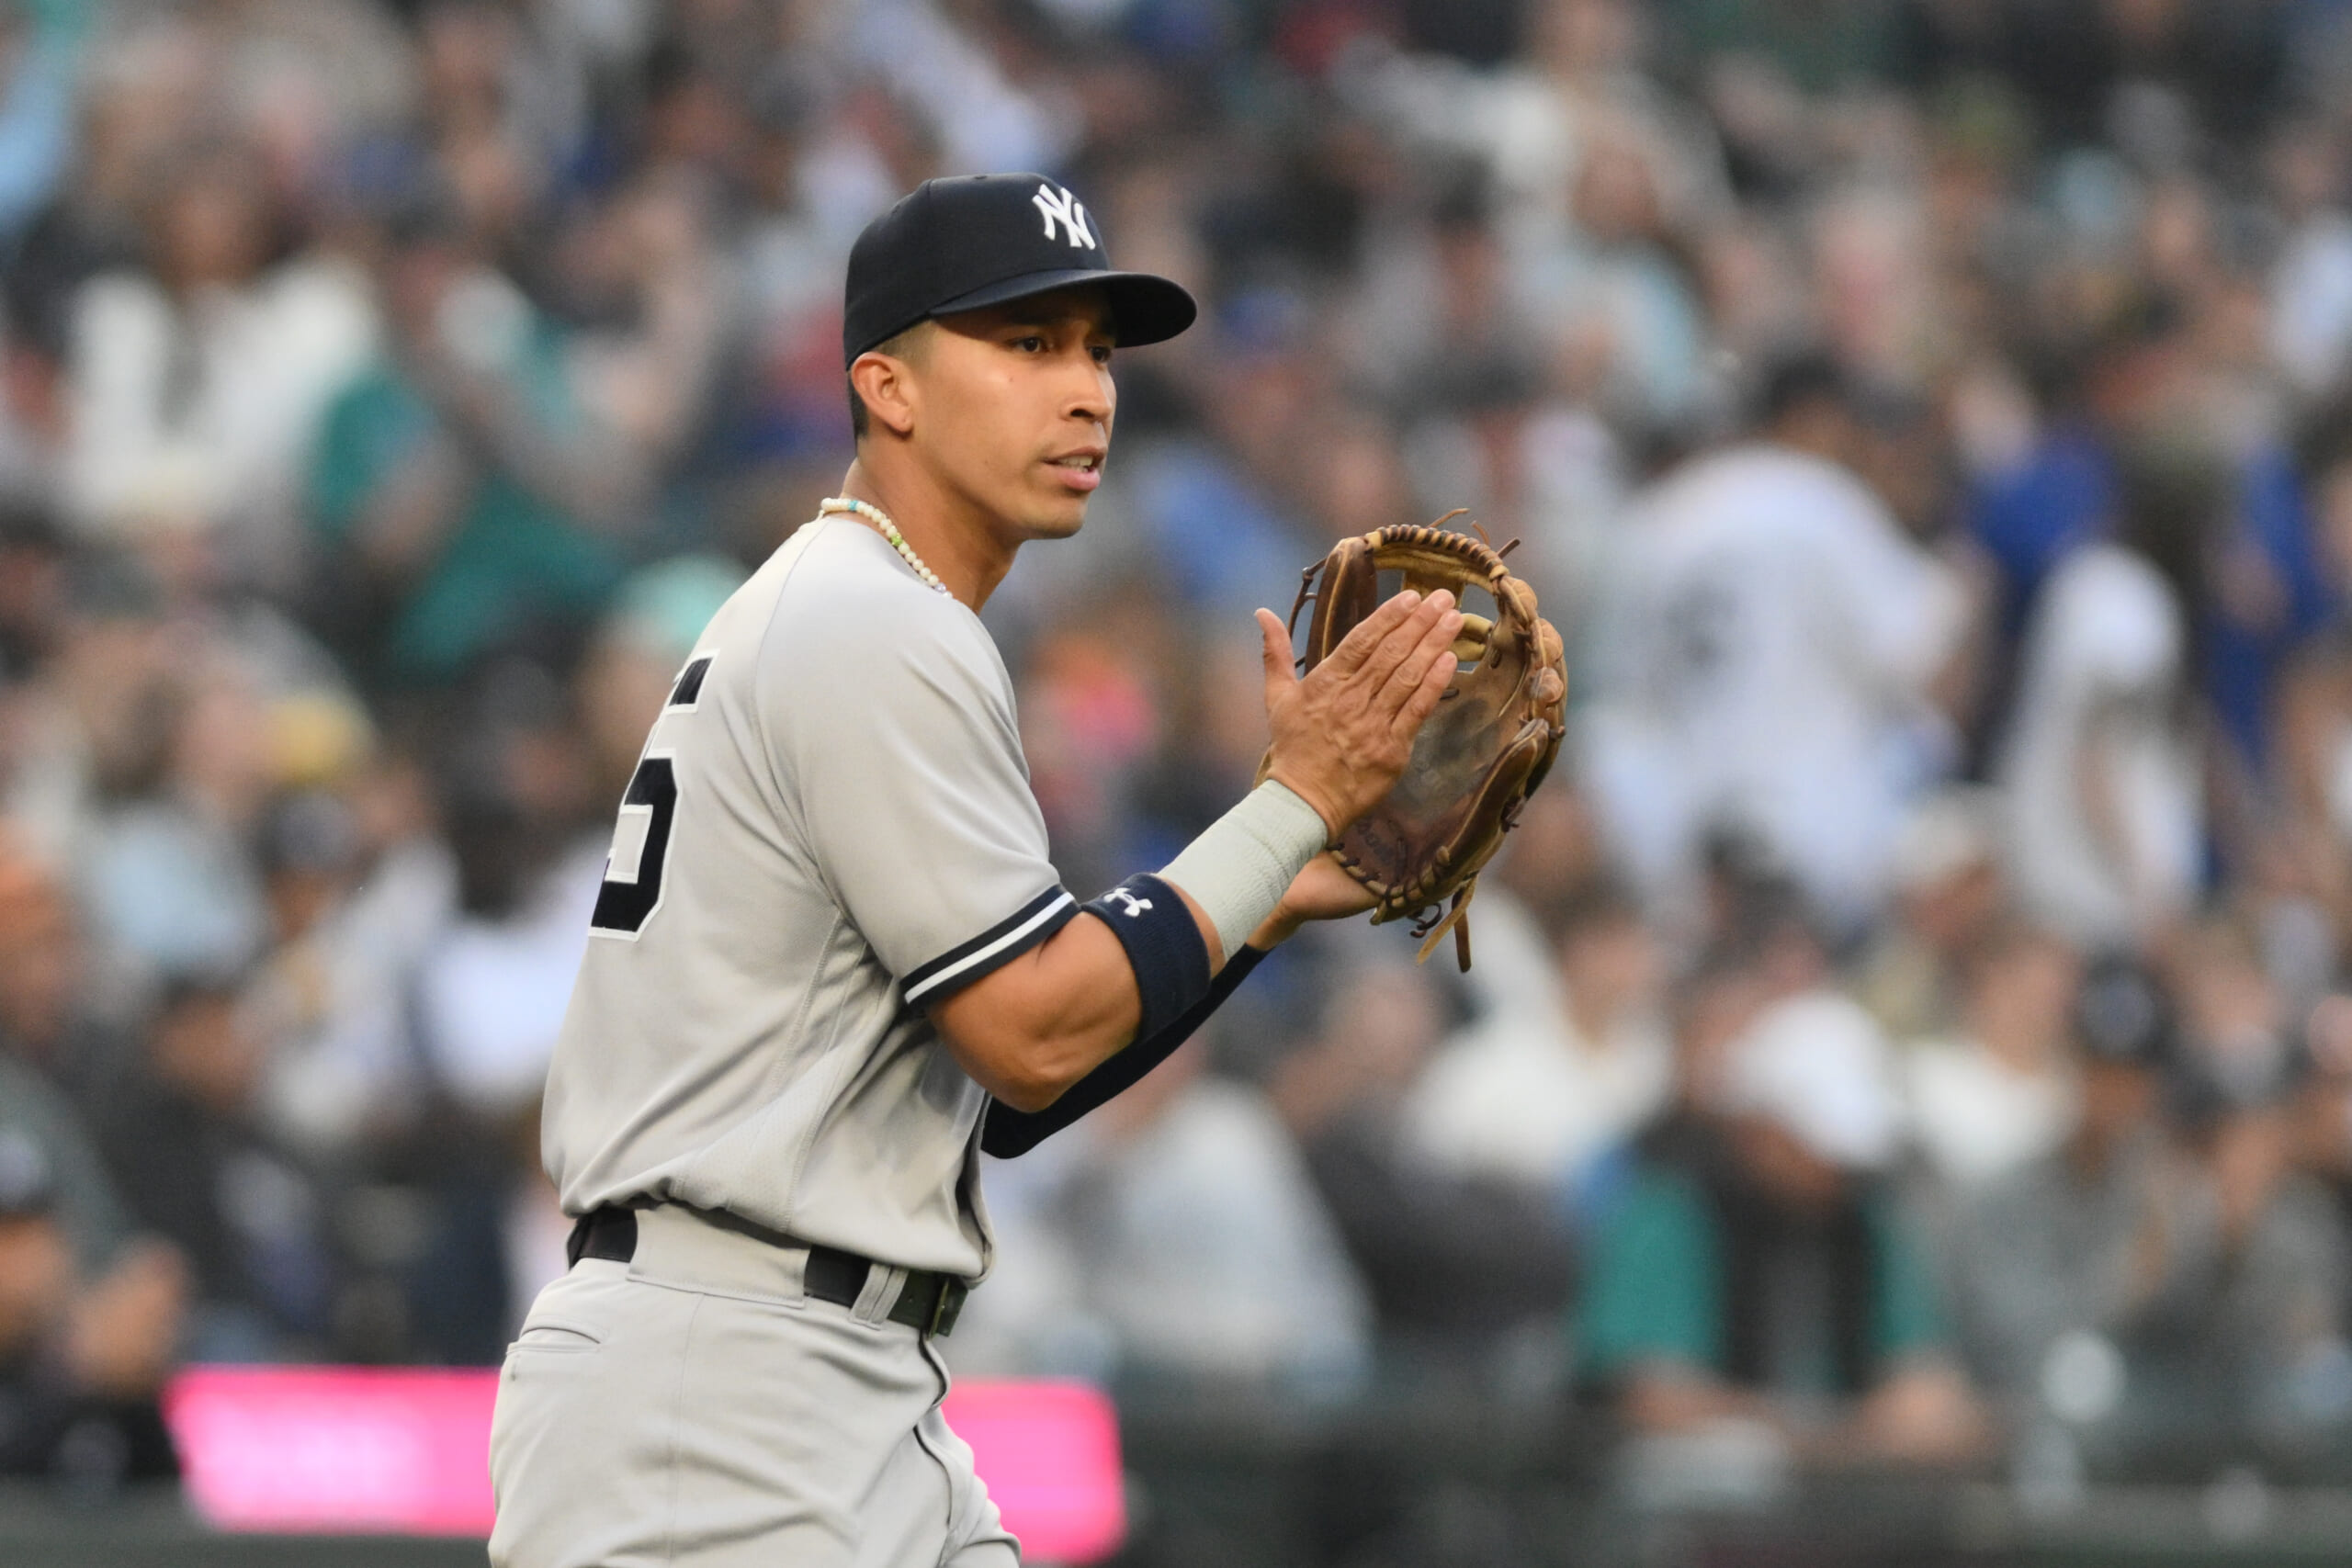 Oswaldo Cabrera embracing Yankees super-utility role